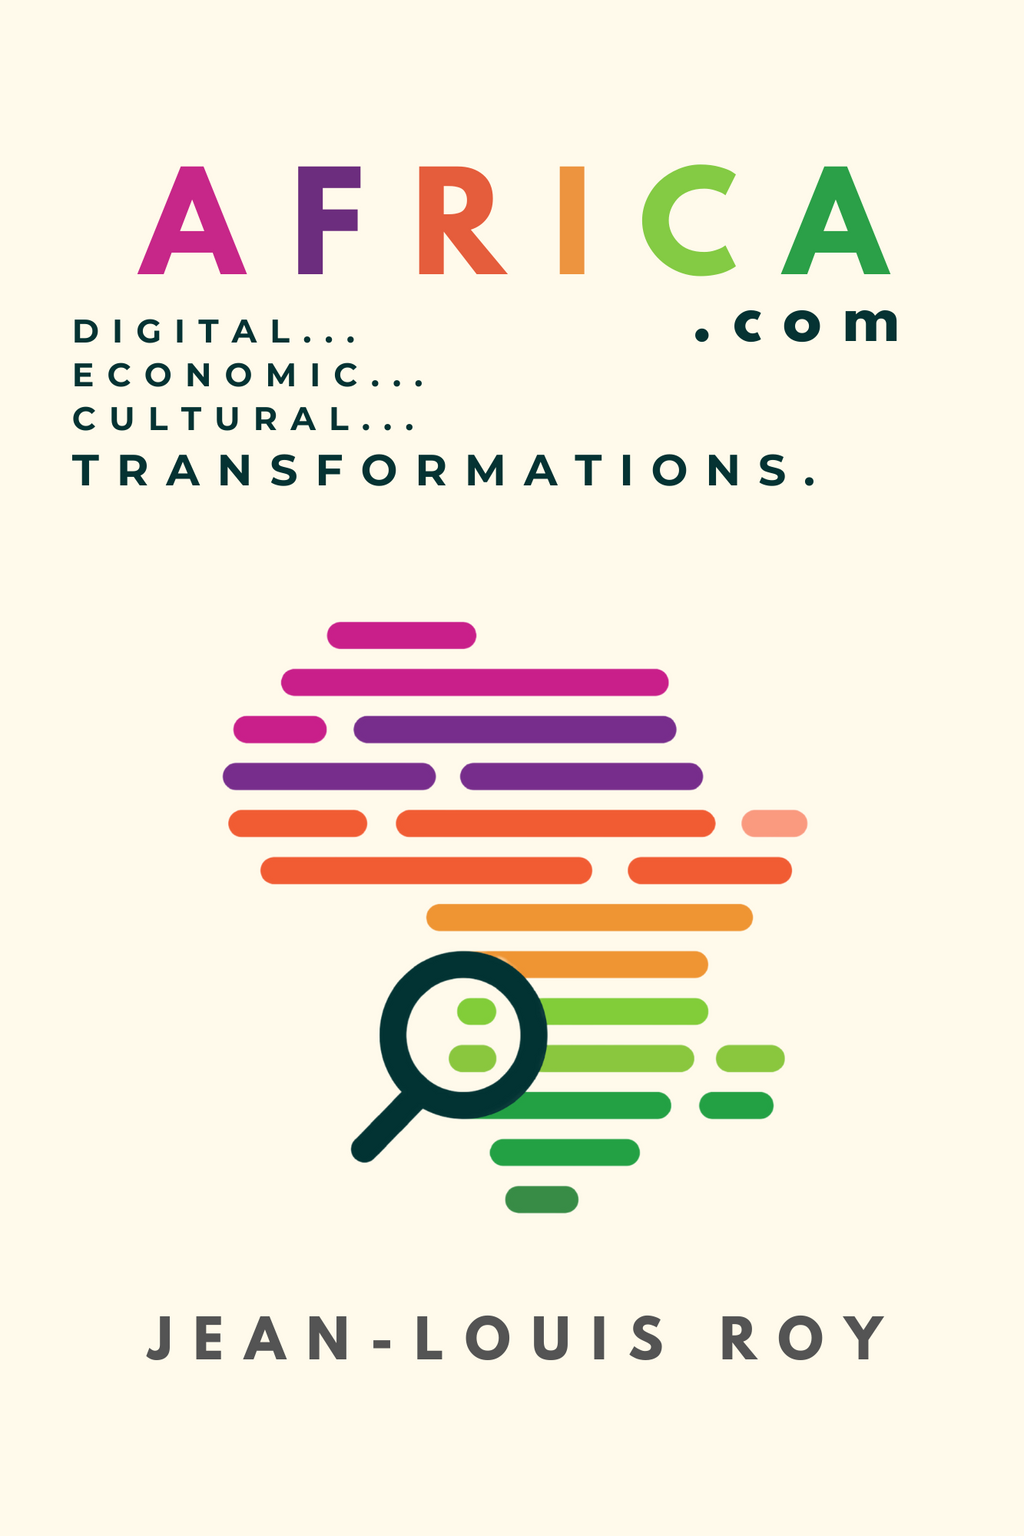 Africa.com - Digital, Economic, Cultural Transformations - Jean-Louis Roy